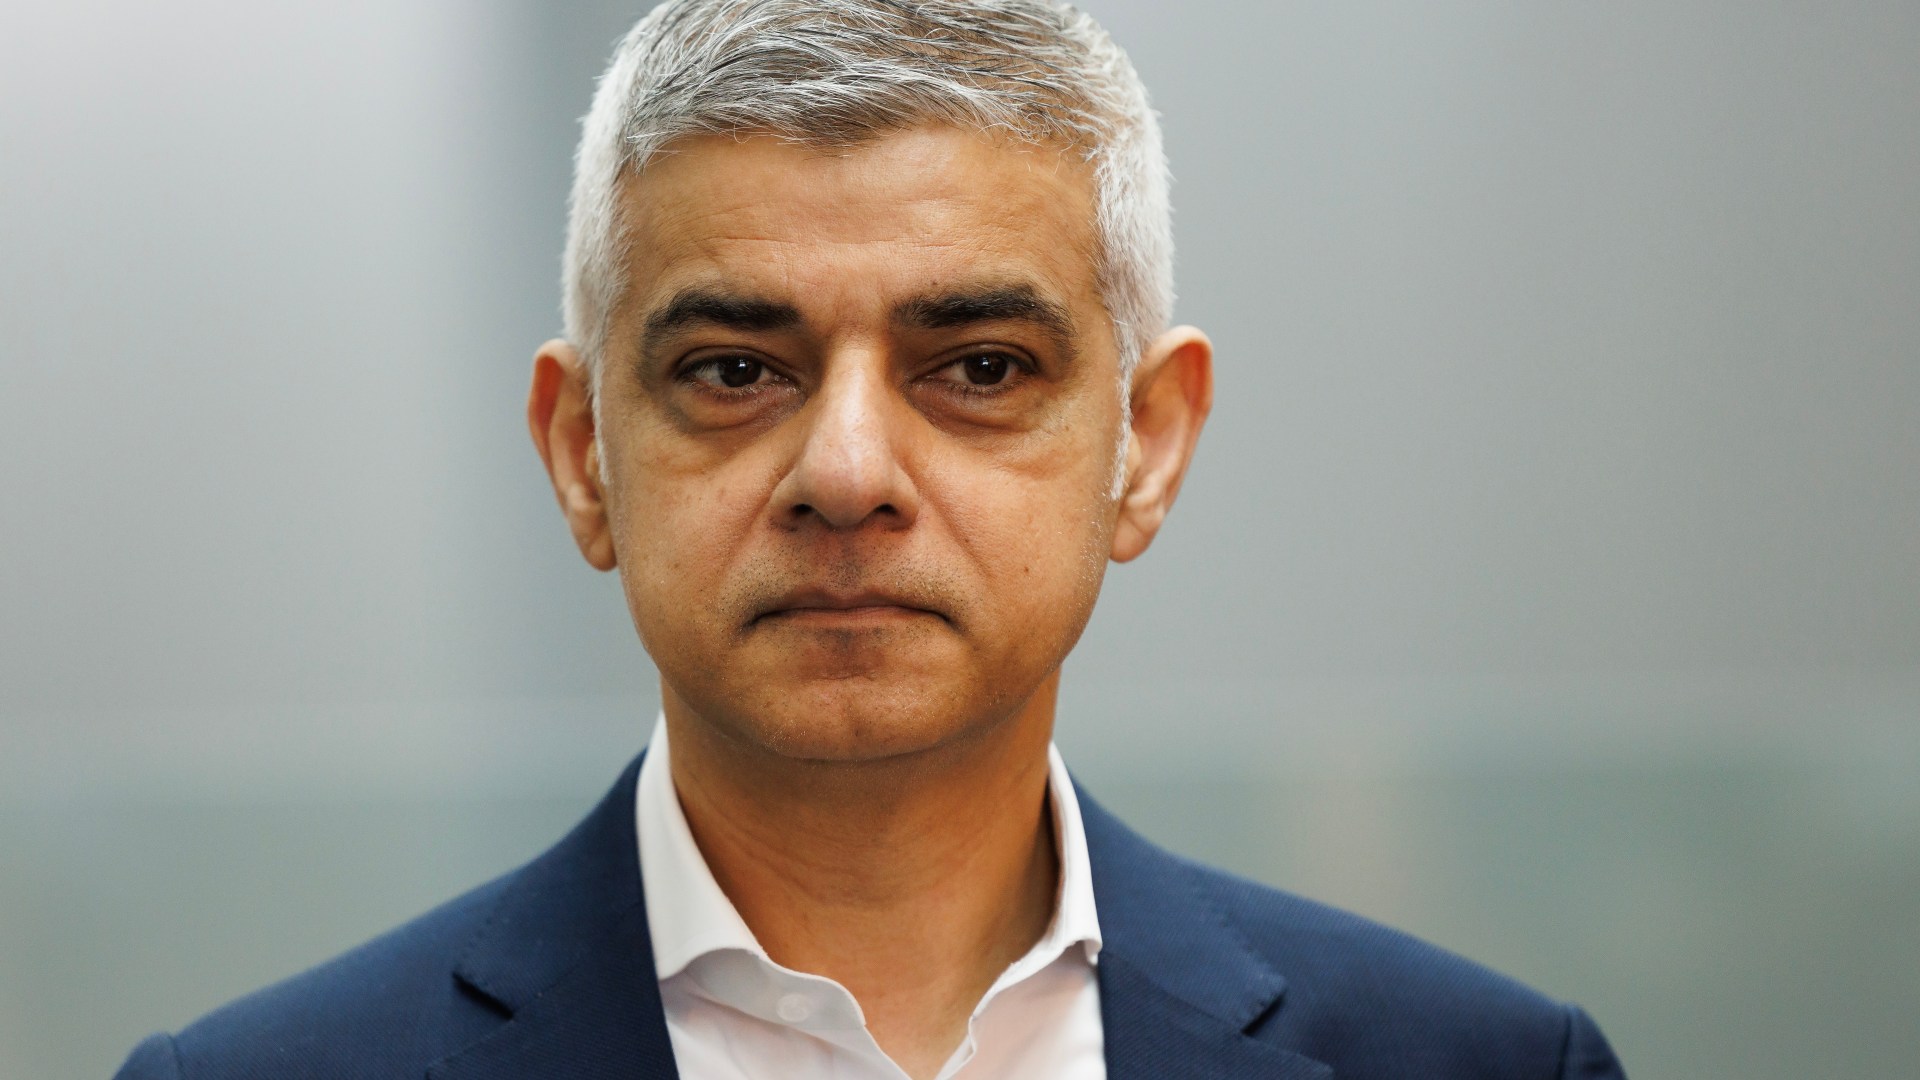 Mayor of London Sadiq Khan’s Apology to UK’s Chief Rabbi: A Lesson in Tackling Islamophobia